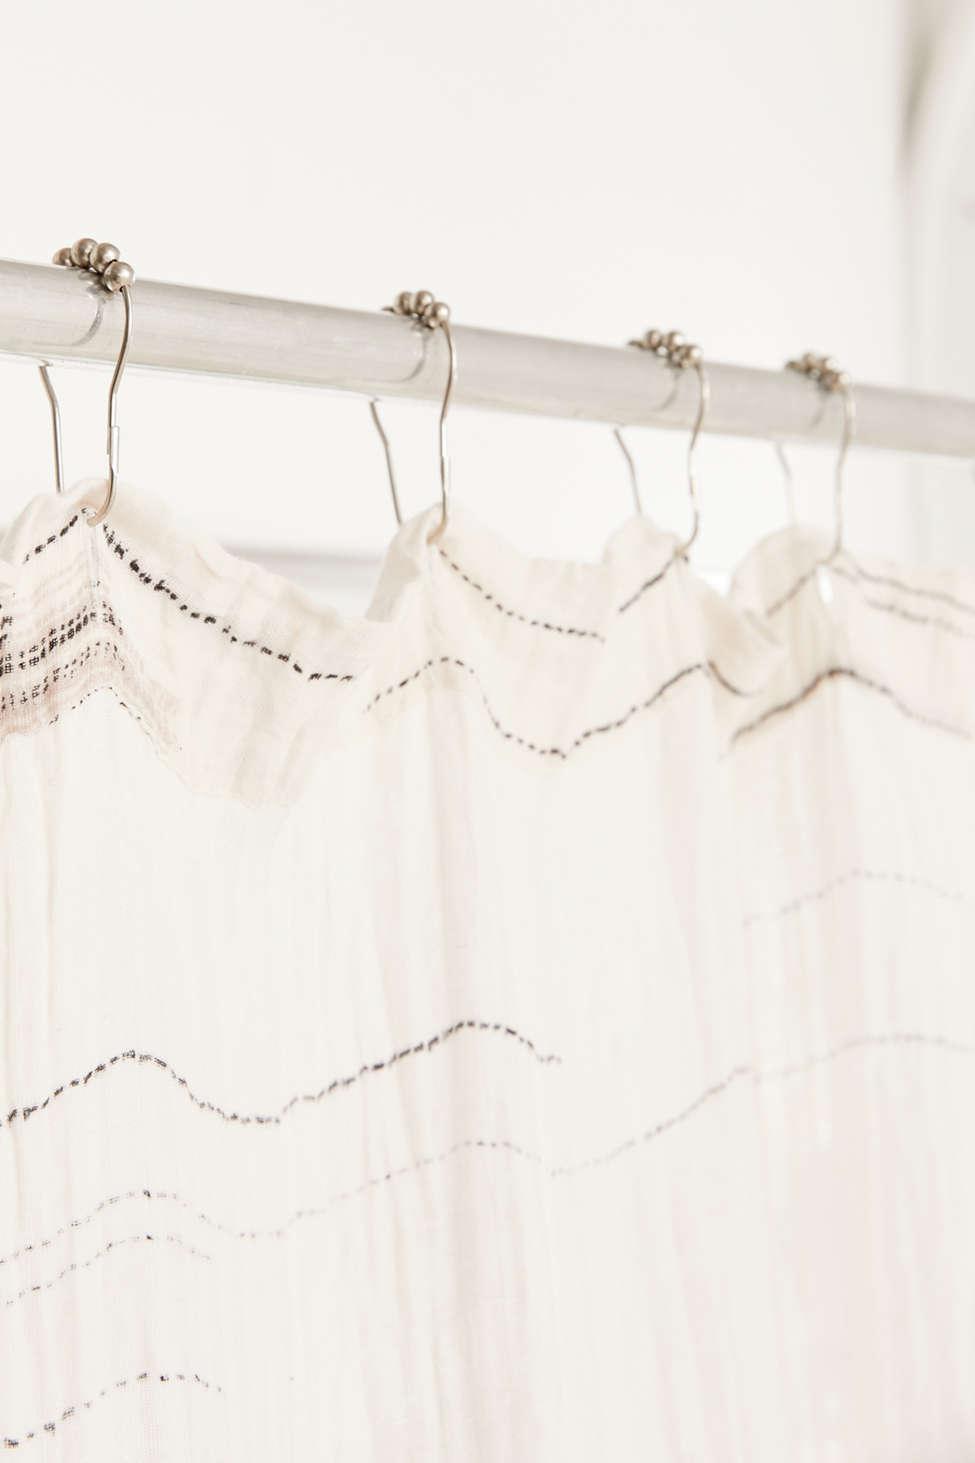 Cotton Inga Gauze Shower Curtain, Urban Outfitters Ruffle Shower Curtain